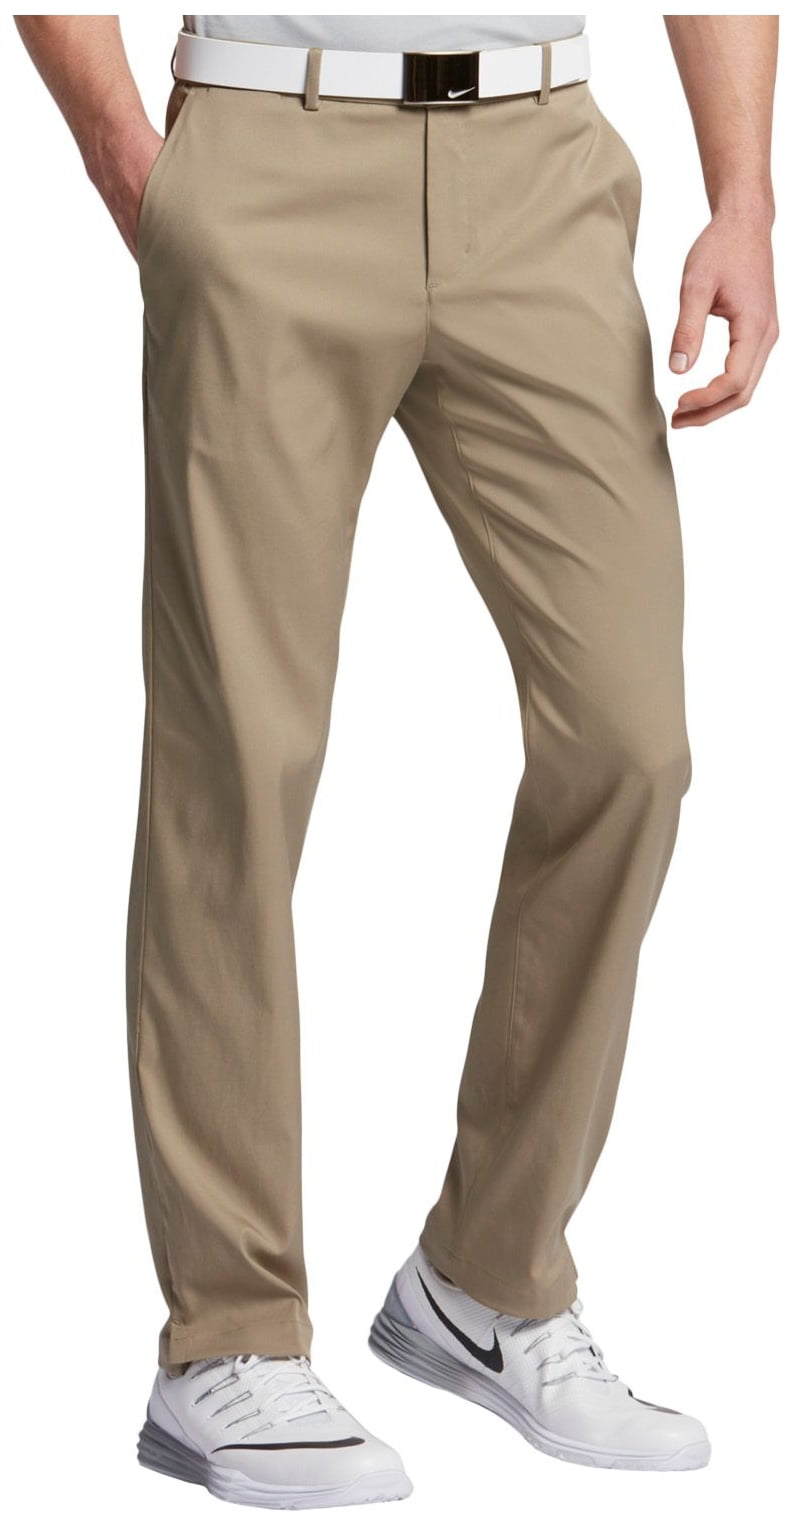 Nike Men's Flat Front Golf Pants (KHAKI/KHAKI, 30-32) - Walmart.com ...